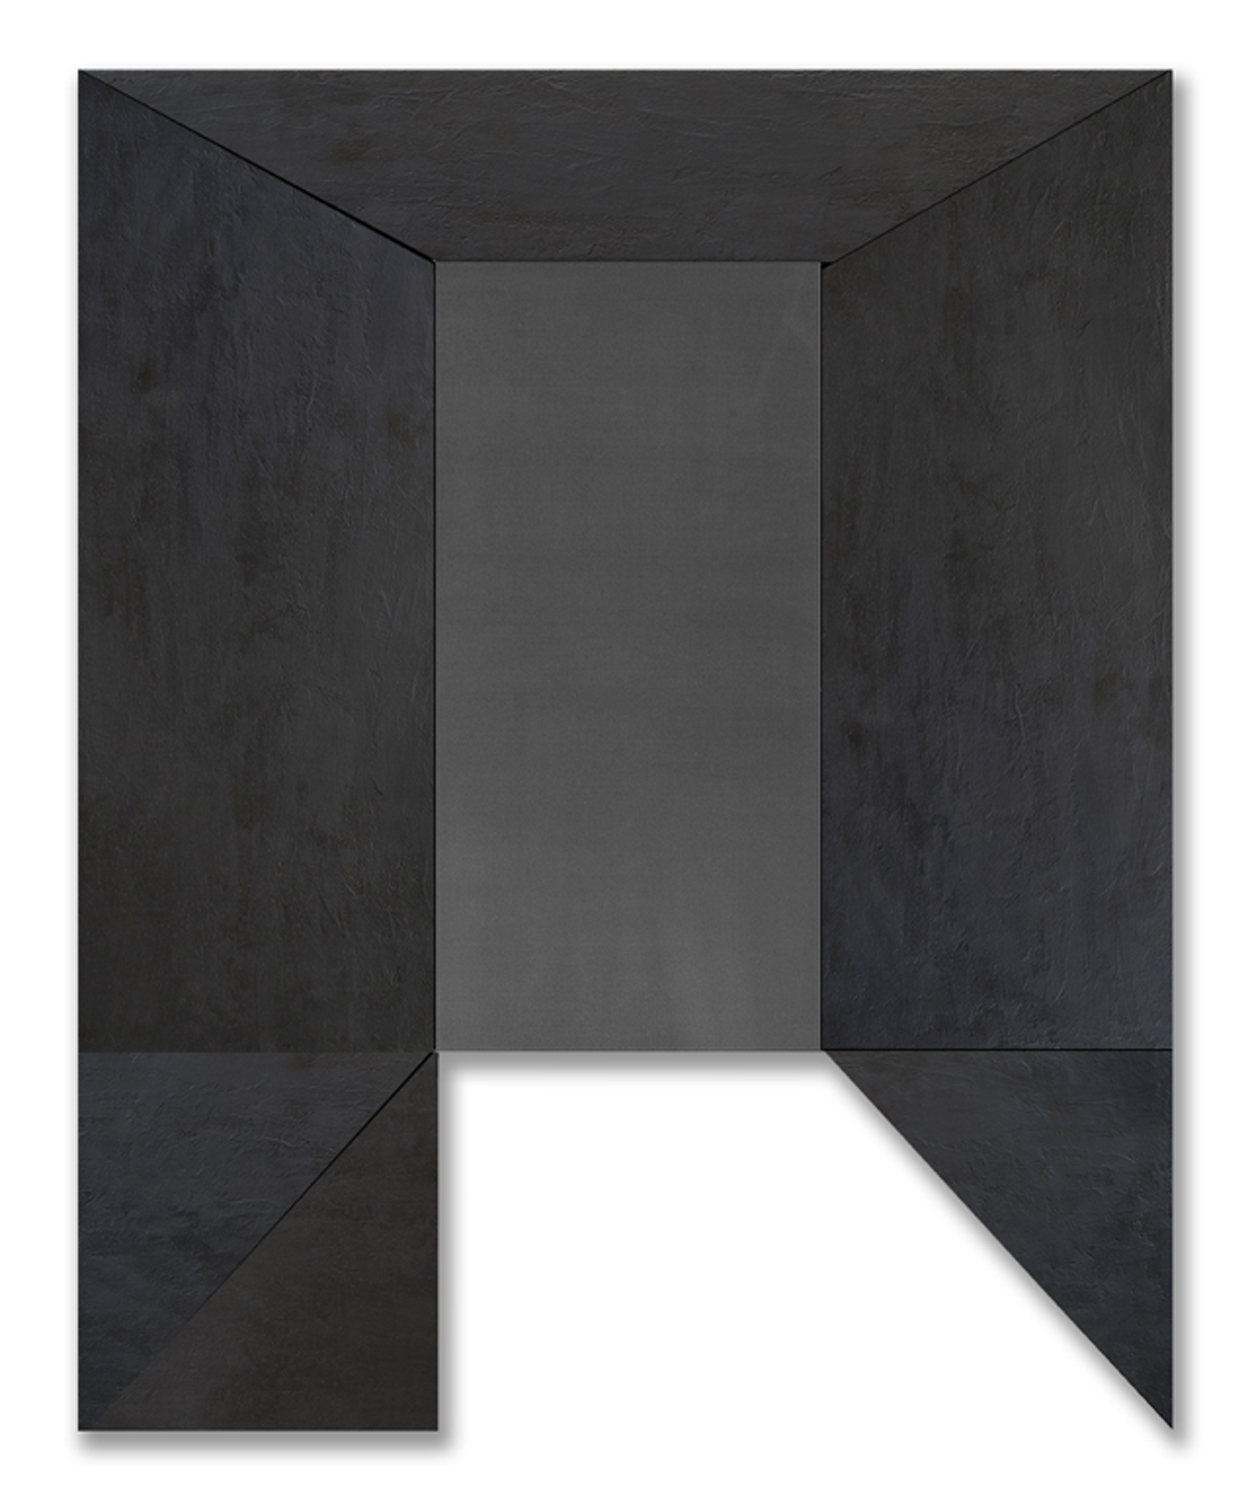  Lead Door, 2015  Tar and Lead on Wood  108” x 91”    Puerta de Plomo, 2015  Chapopote y Plomo  275 cm X 230 cm 